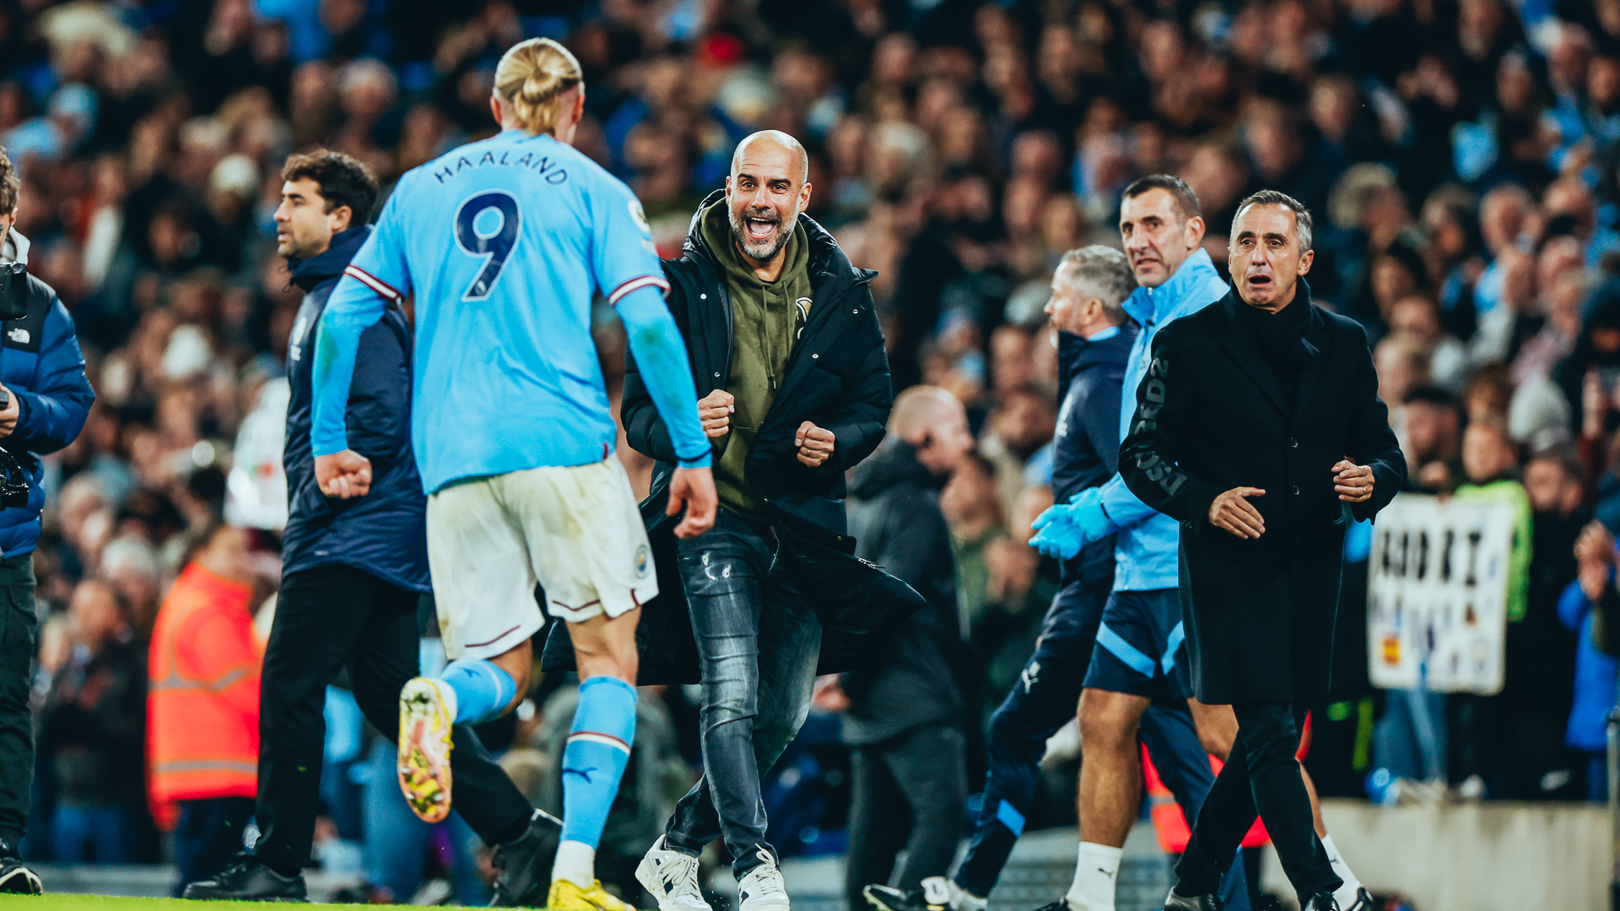 Moments like these make sense of our job, says Guardiola